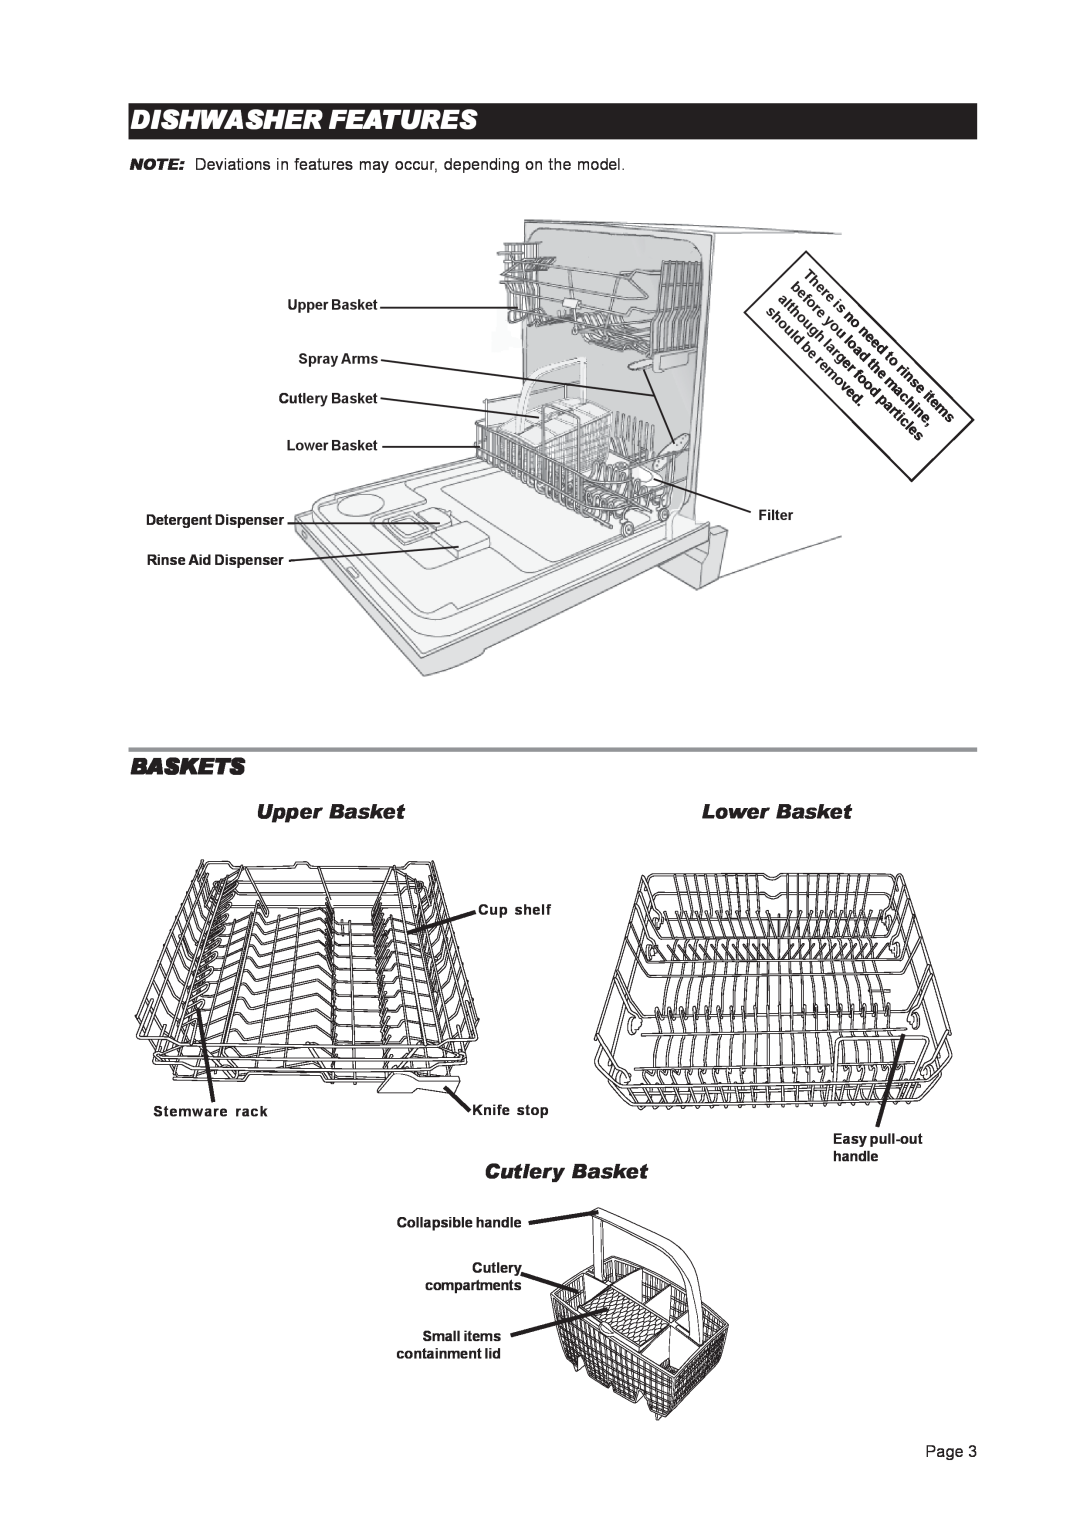 Asko D3121 Dishwasher Features, Baskets, Upper Basket, Lower Basket, Cutlery Basket, beforeis, rinse, particles, although 